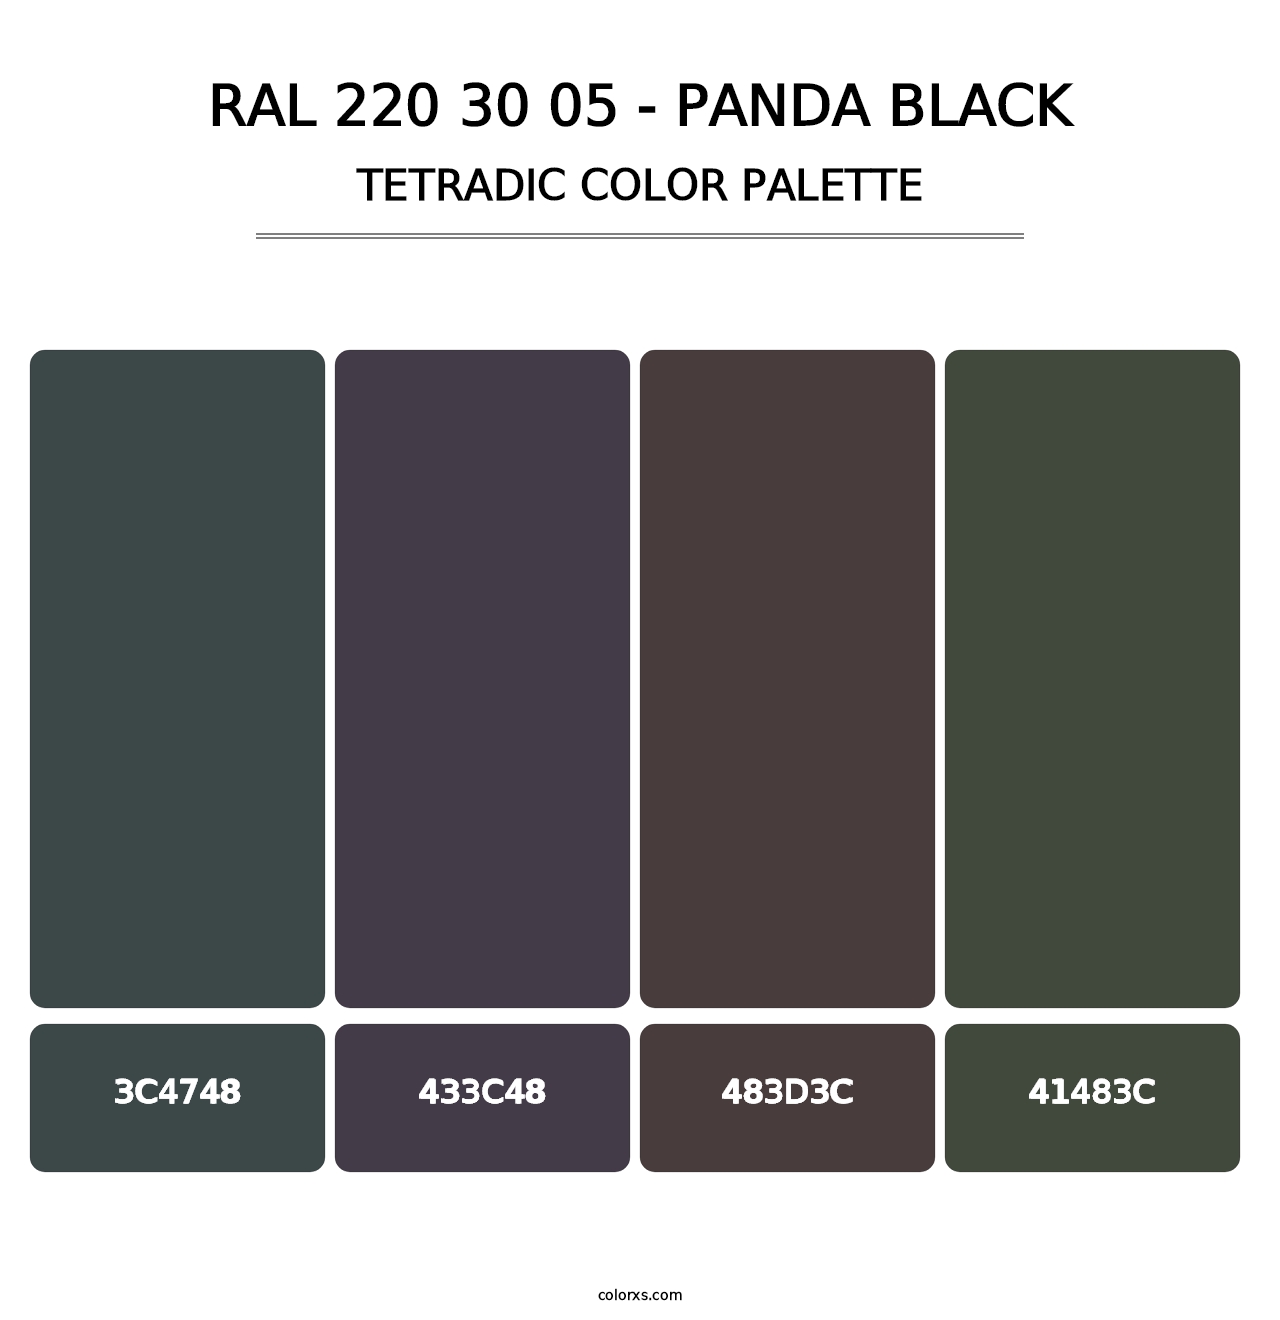 RAL 220 30 05 - Panda Black - Tetradic Color Palette